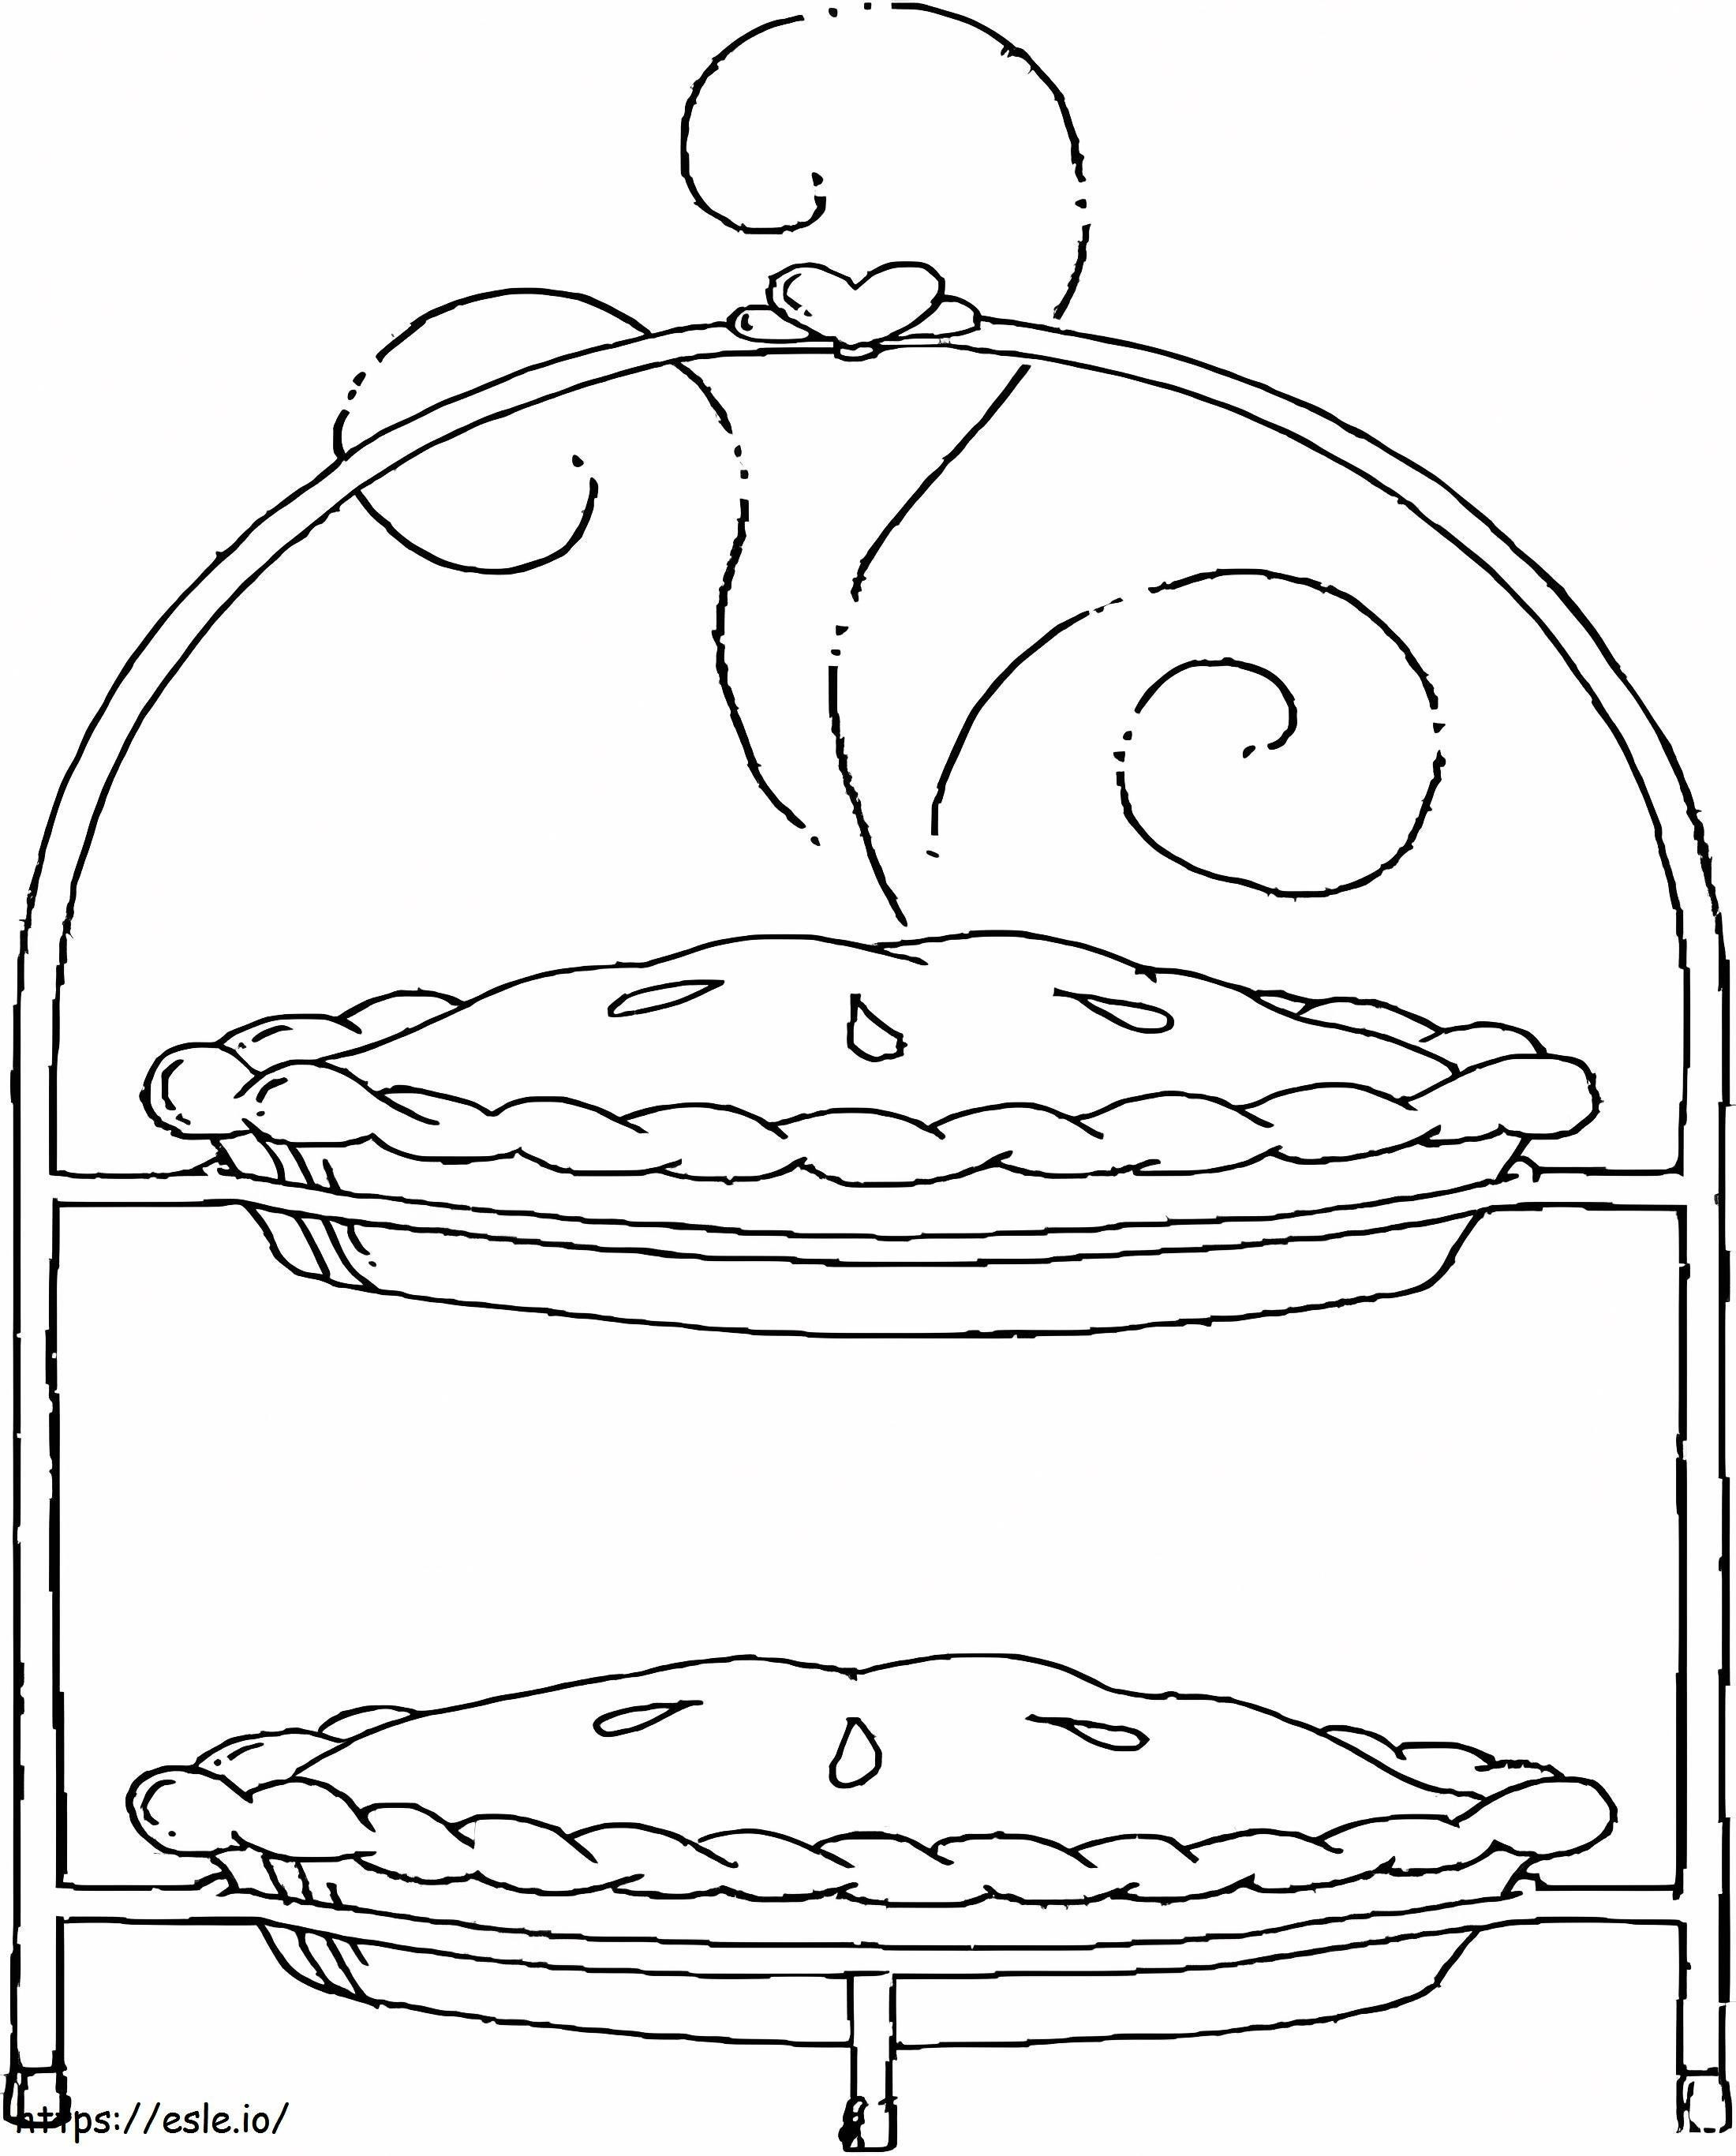 Free Printable Pie coloring page